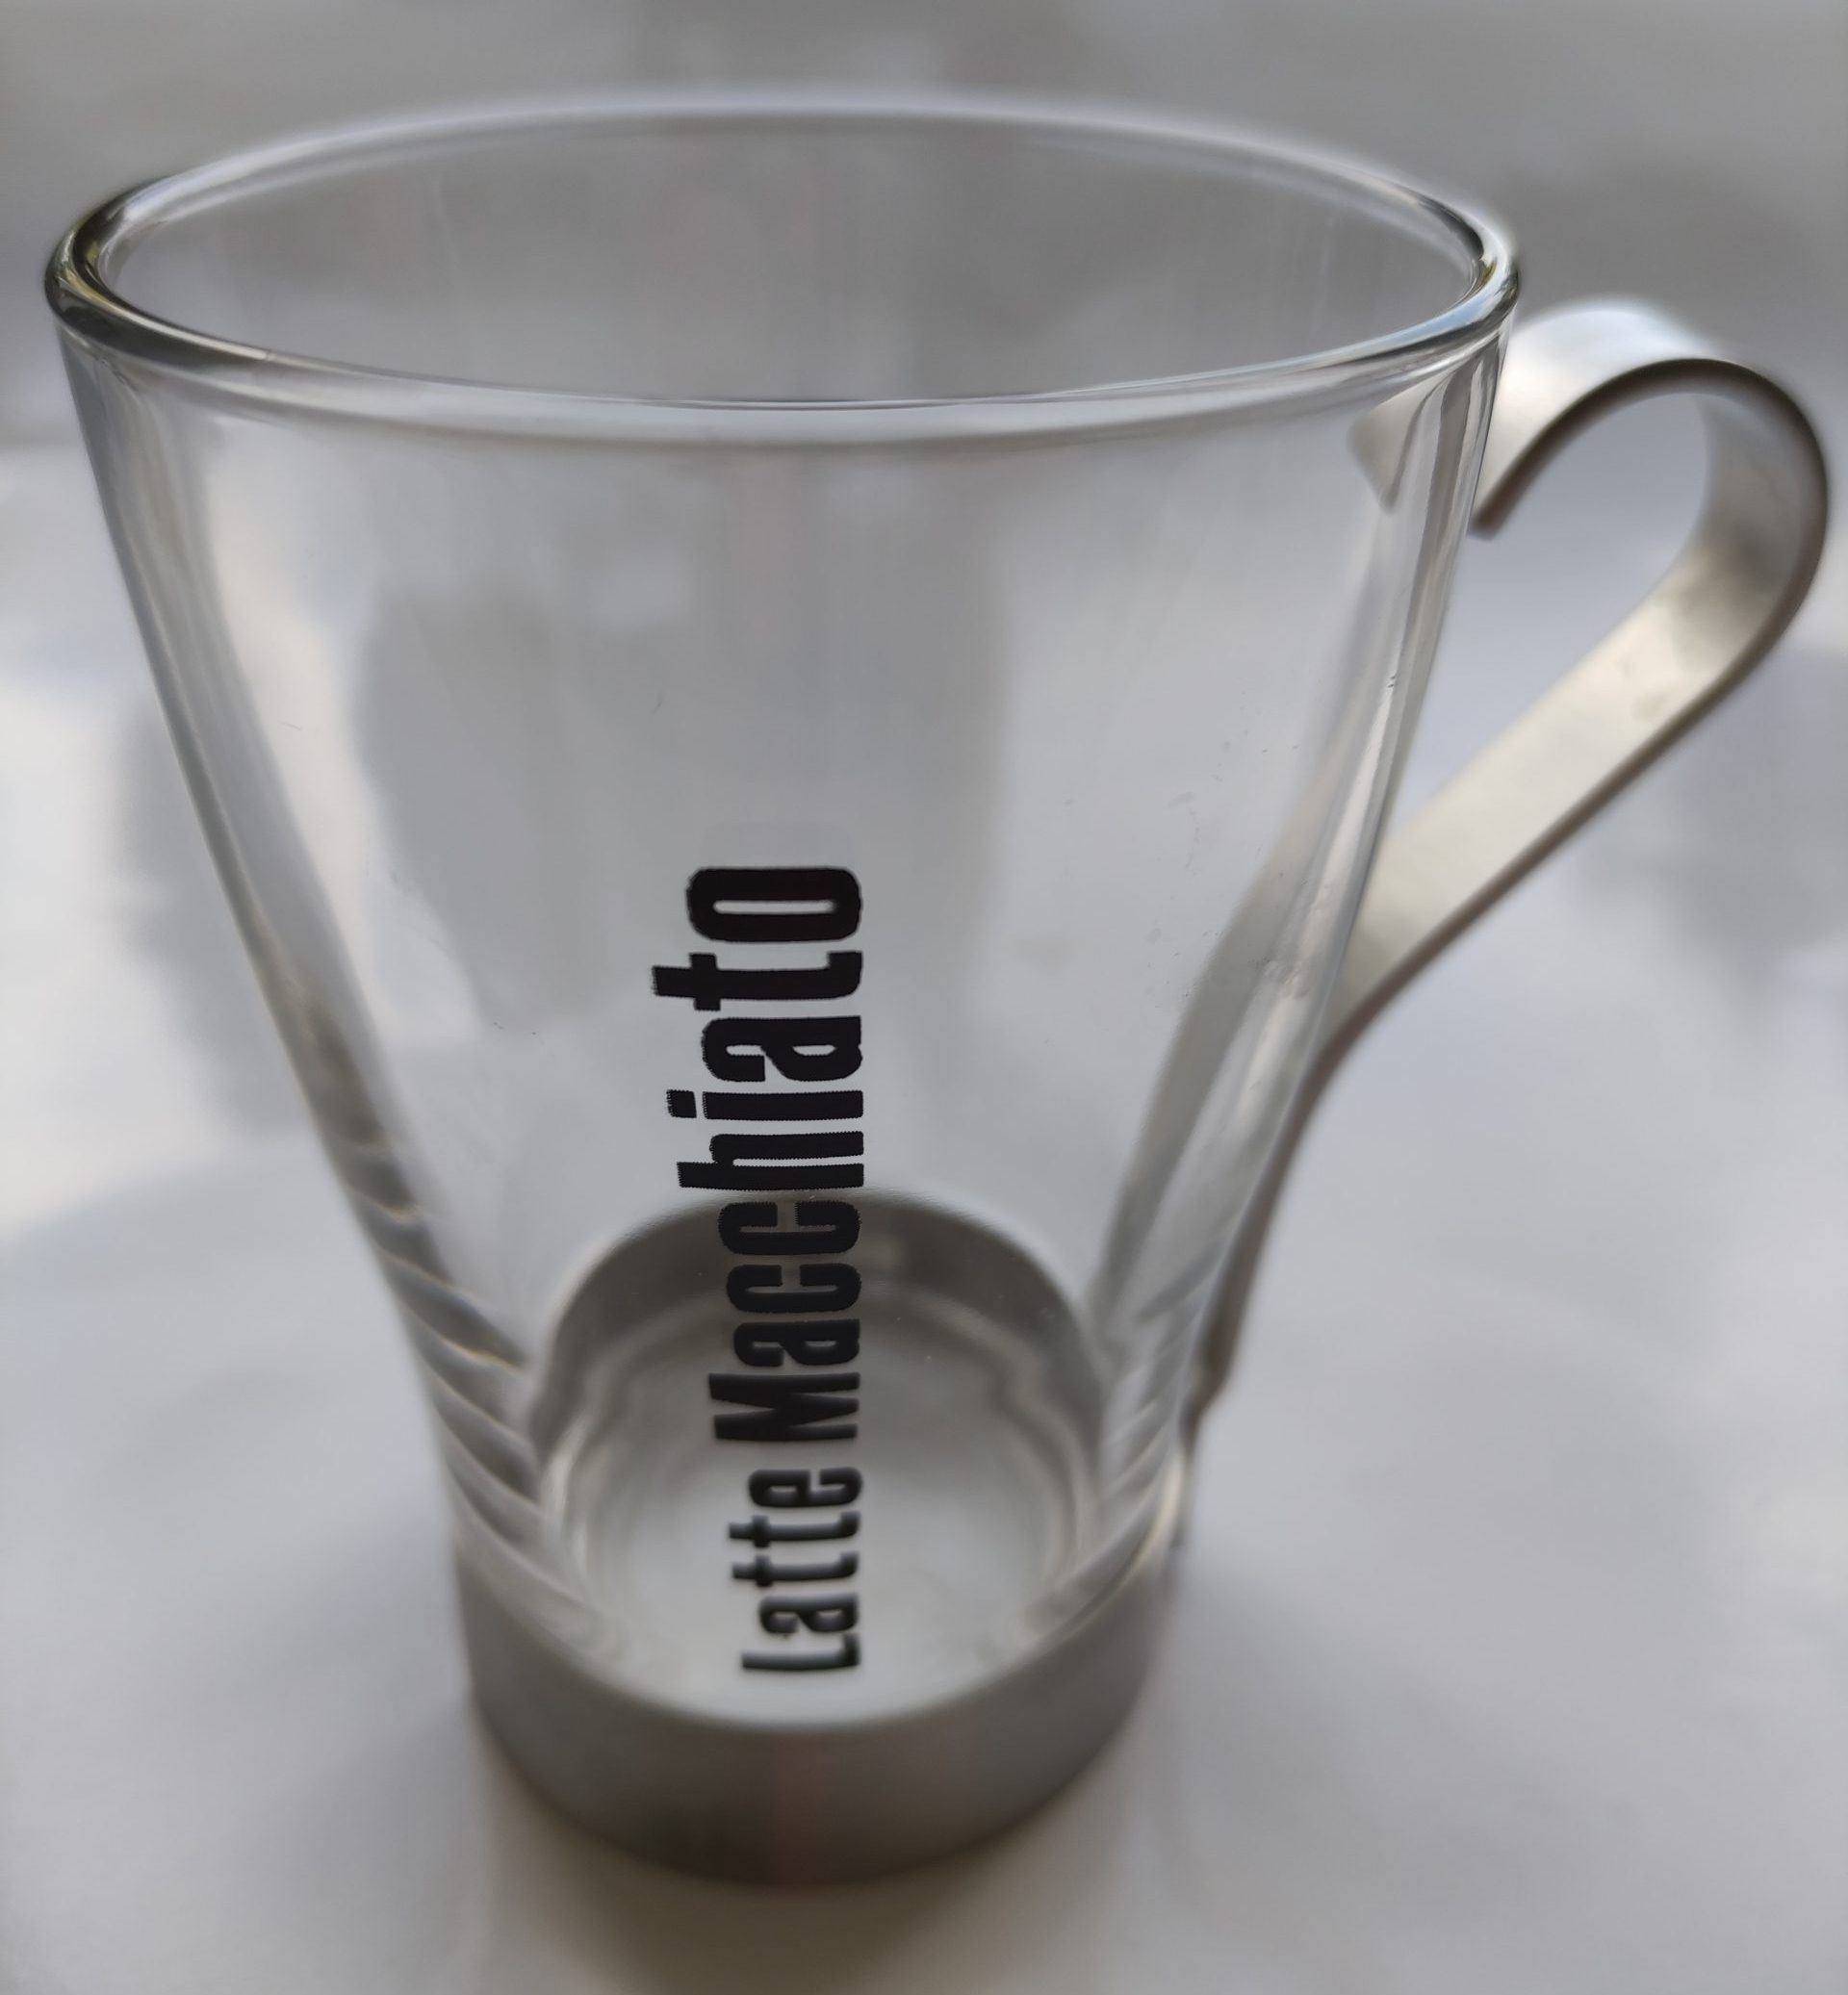 WMF. Made in Germany. Latte glas in metalen houder. Per 🌺 Webshop SennaBenna